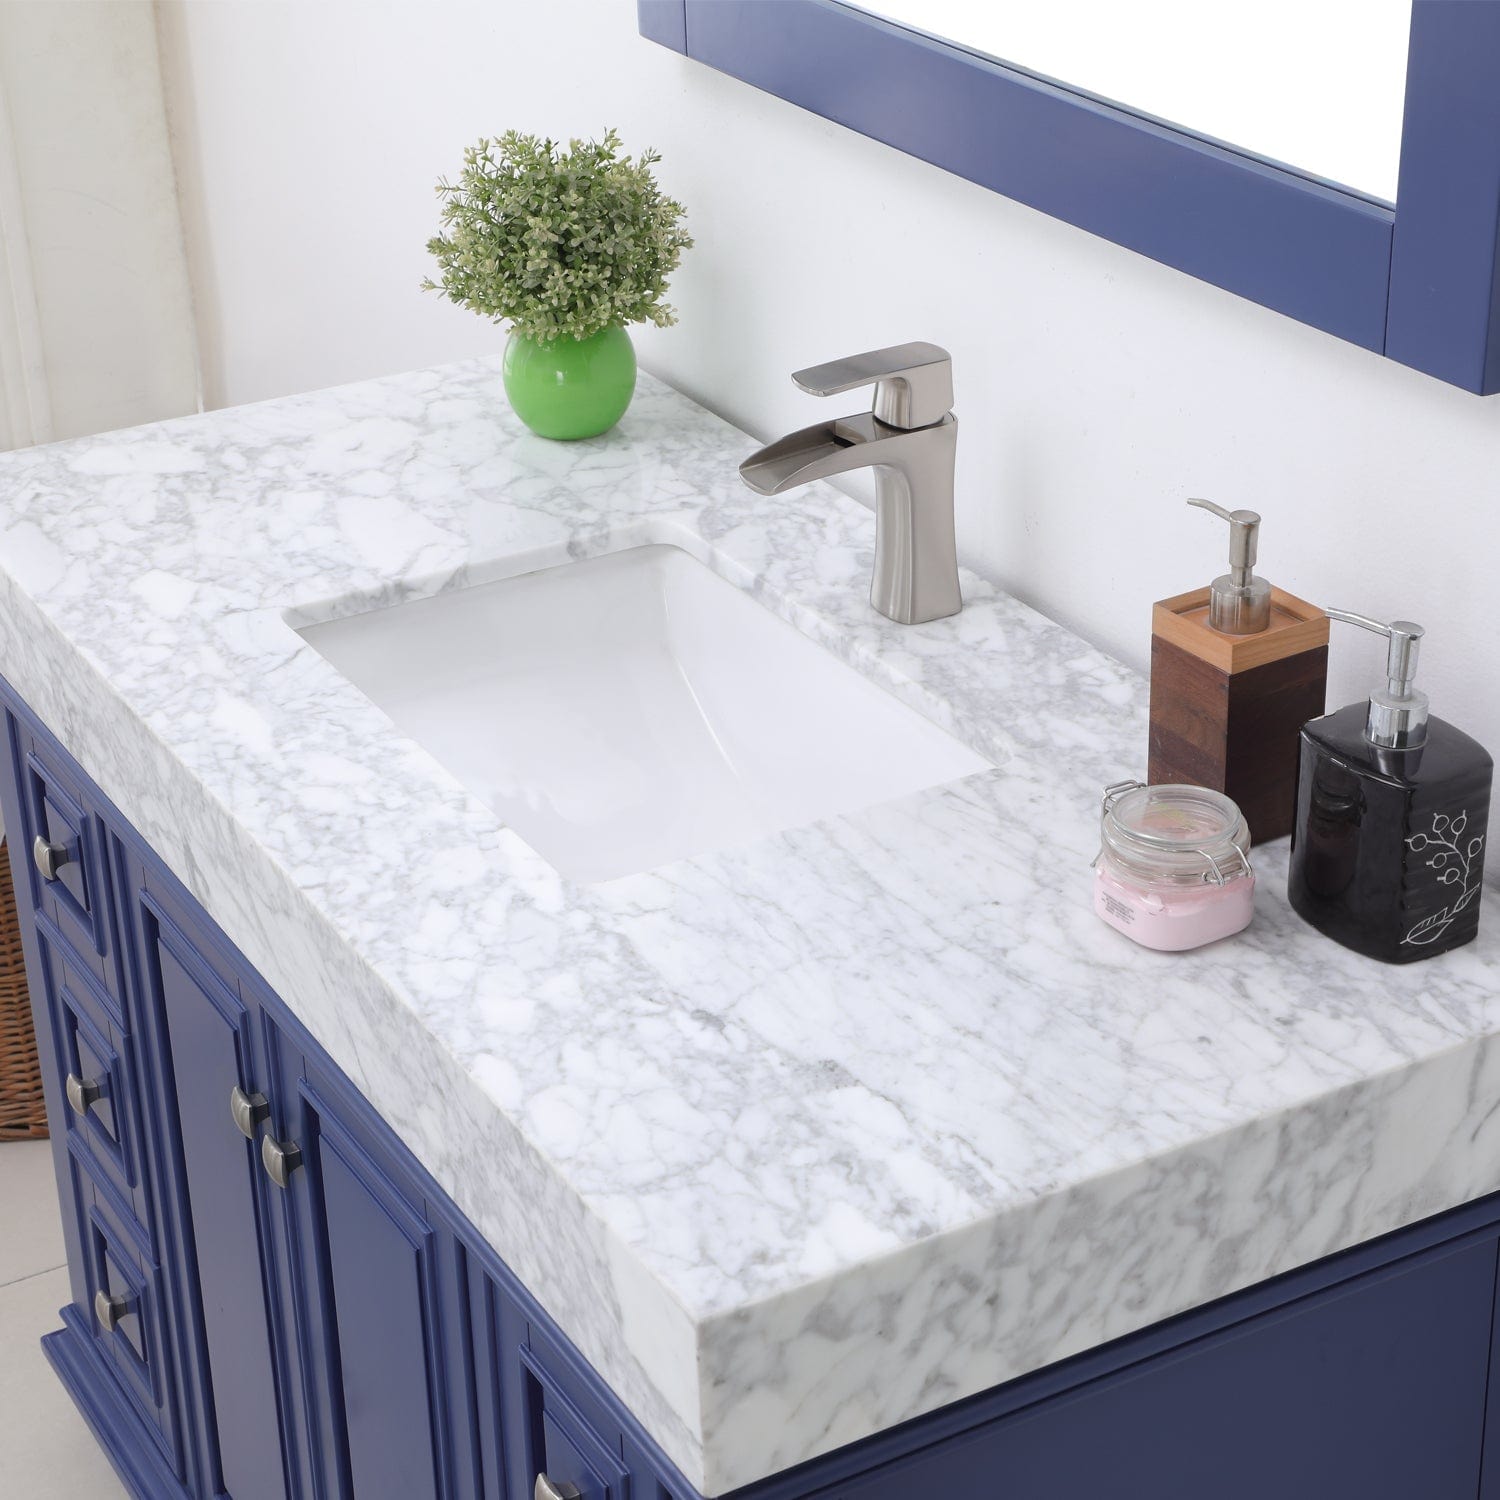 Altair Jardin 48" Single Bathroom Vanity Set in Jewelry Blue and Carrara White Marble Countertop with Mirror 539048-JB-CA - Molaix631112970990Vanity539048-JB-CA